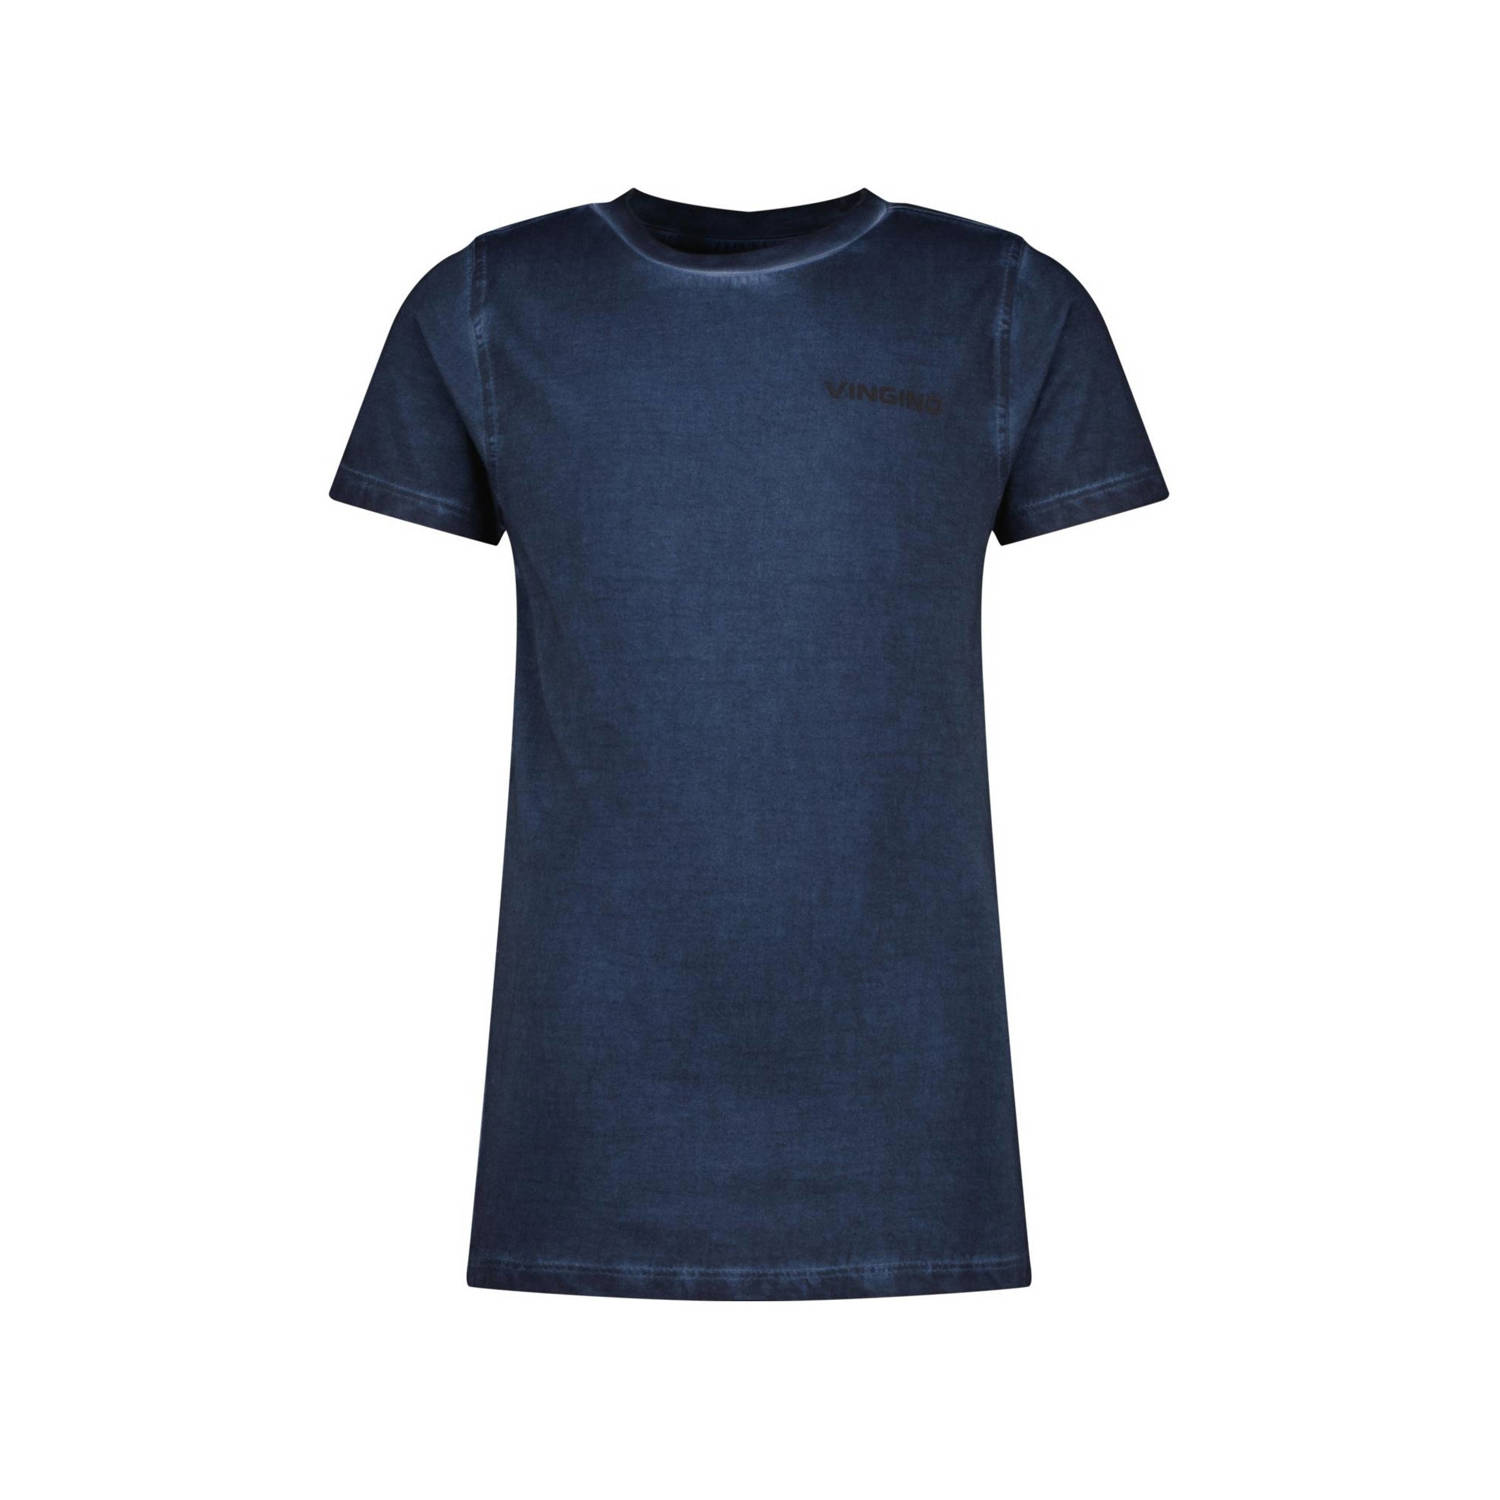 Vingino T-shirt Hilod donkerblauw